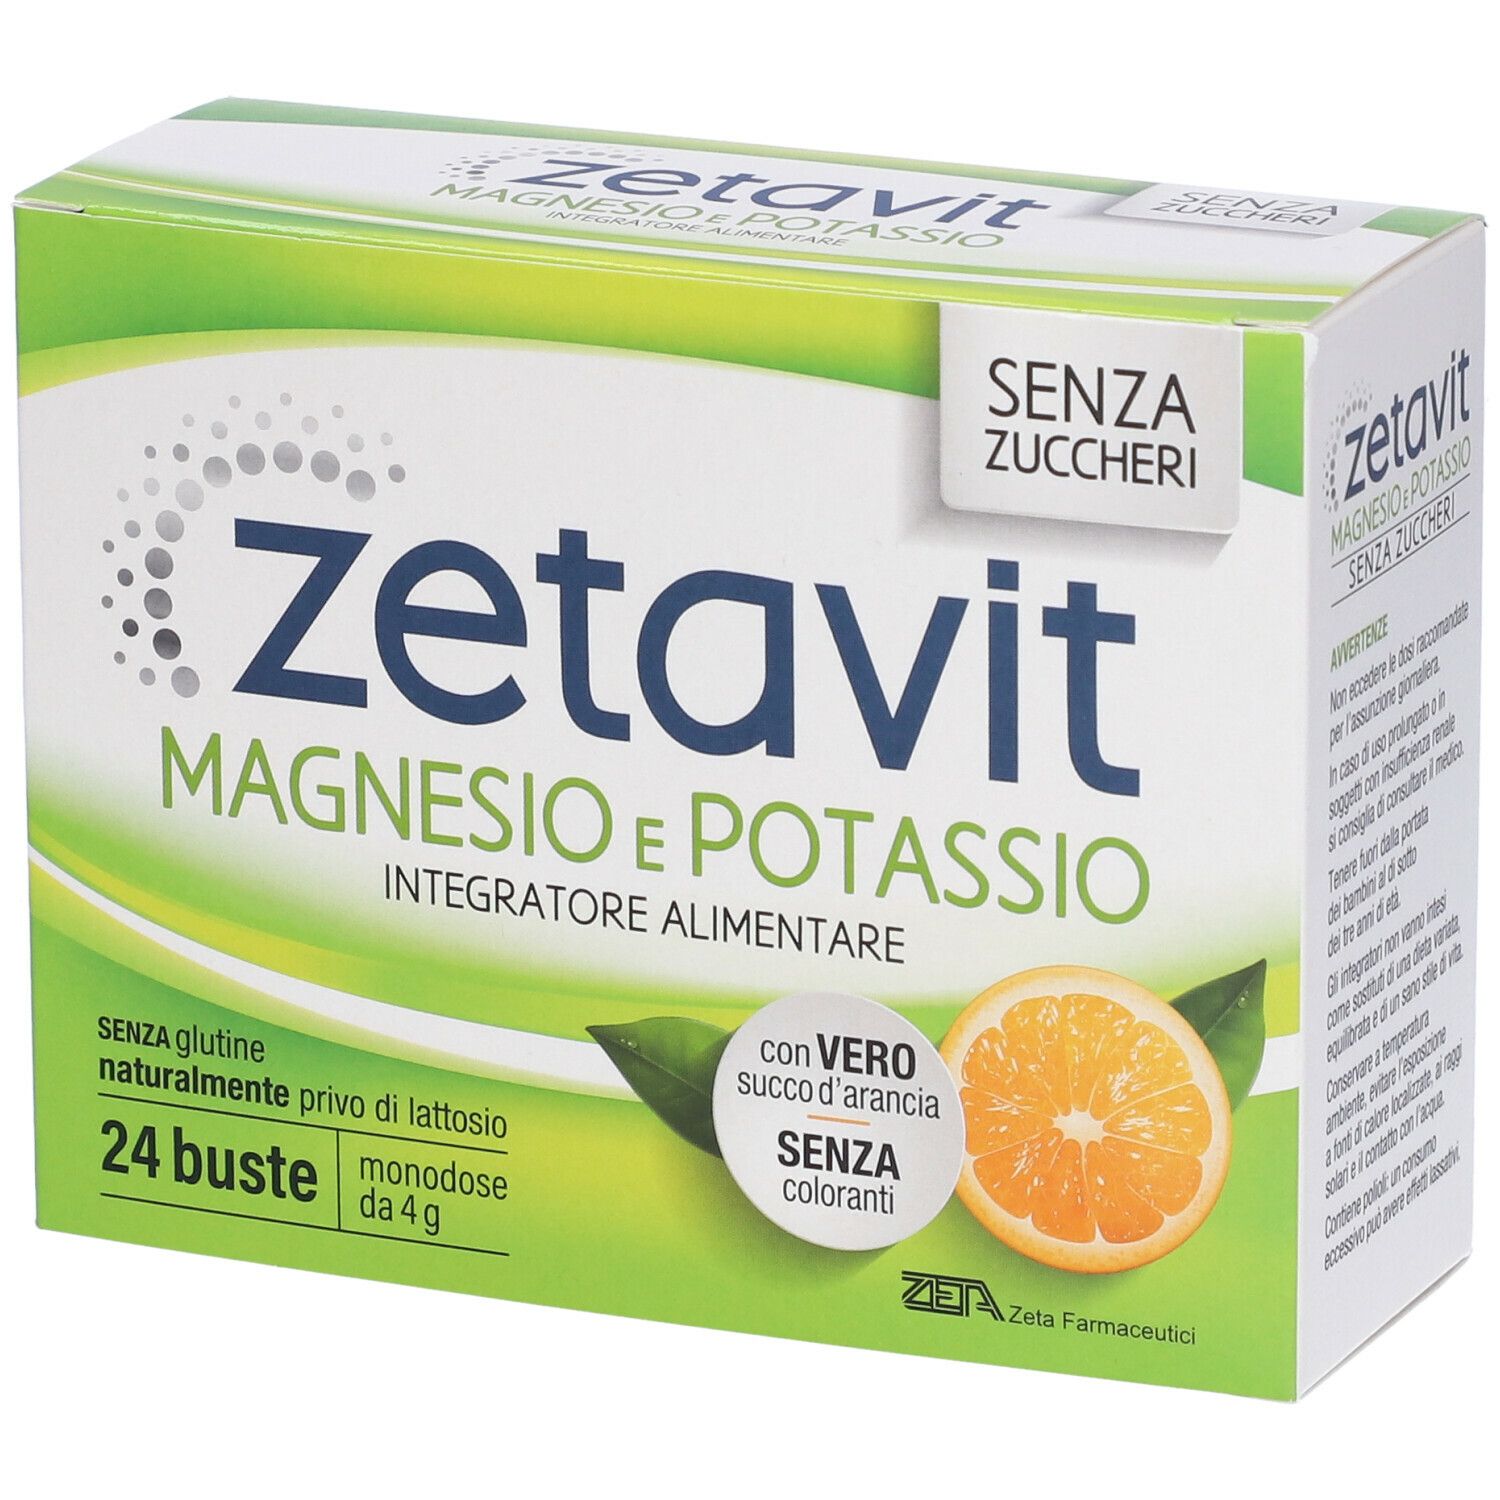 Image of Zetavit Magnesio e Potassio Senza Zuccheri Integratore Alimentare